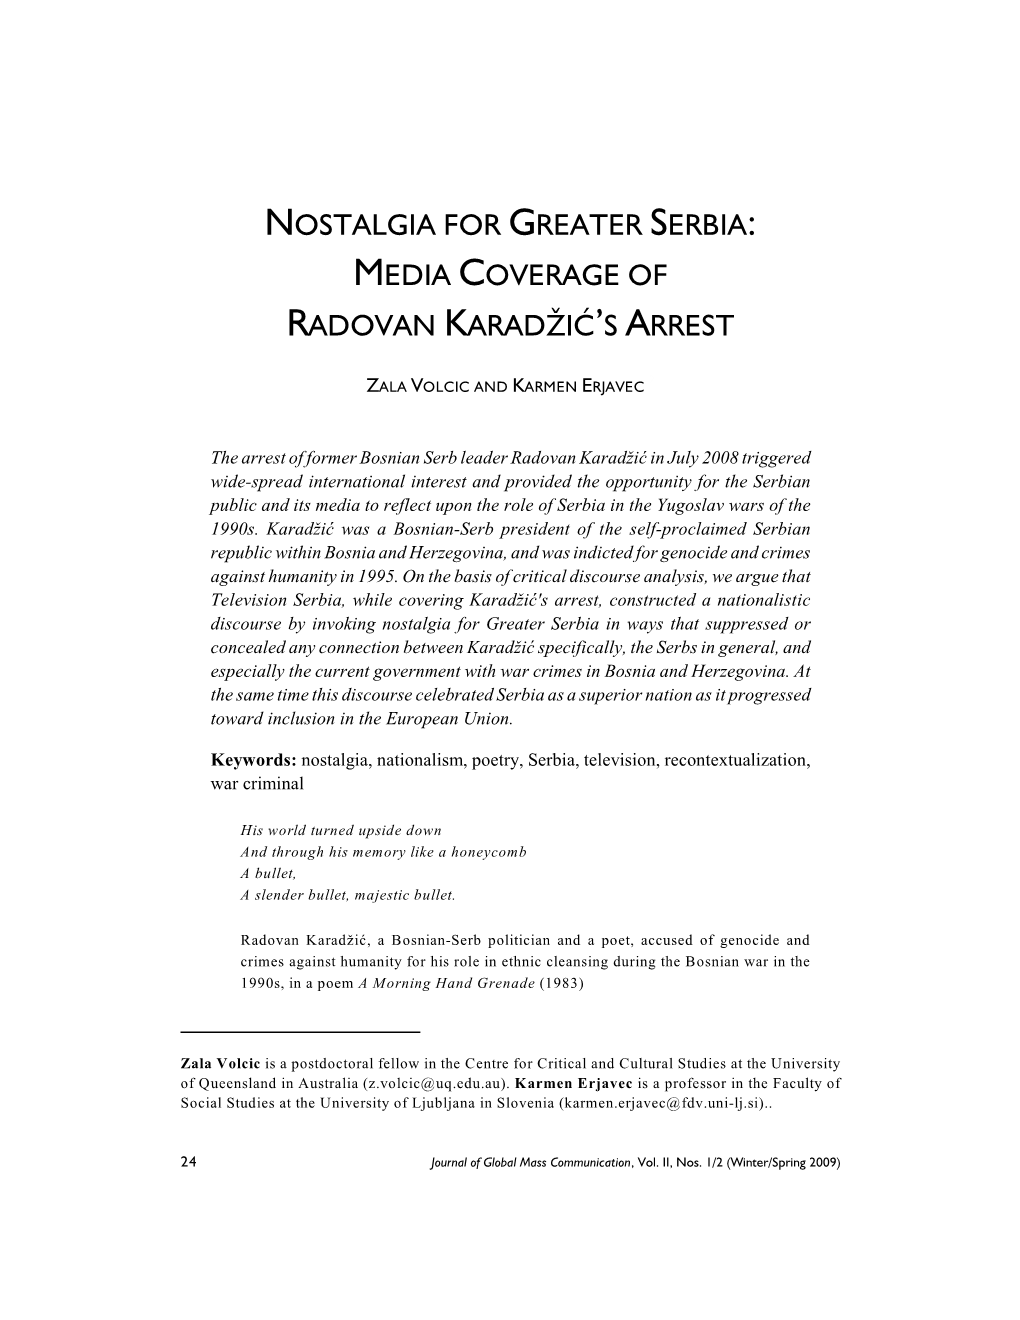 Nostalgia for Greater Serbia: Media Coverage of Radovan Karadžiæ’S Arrest